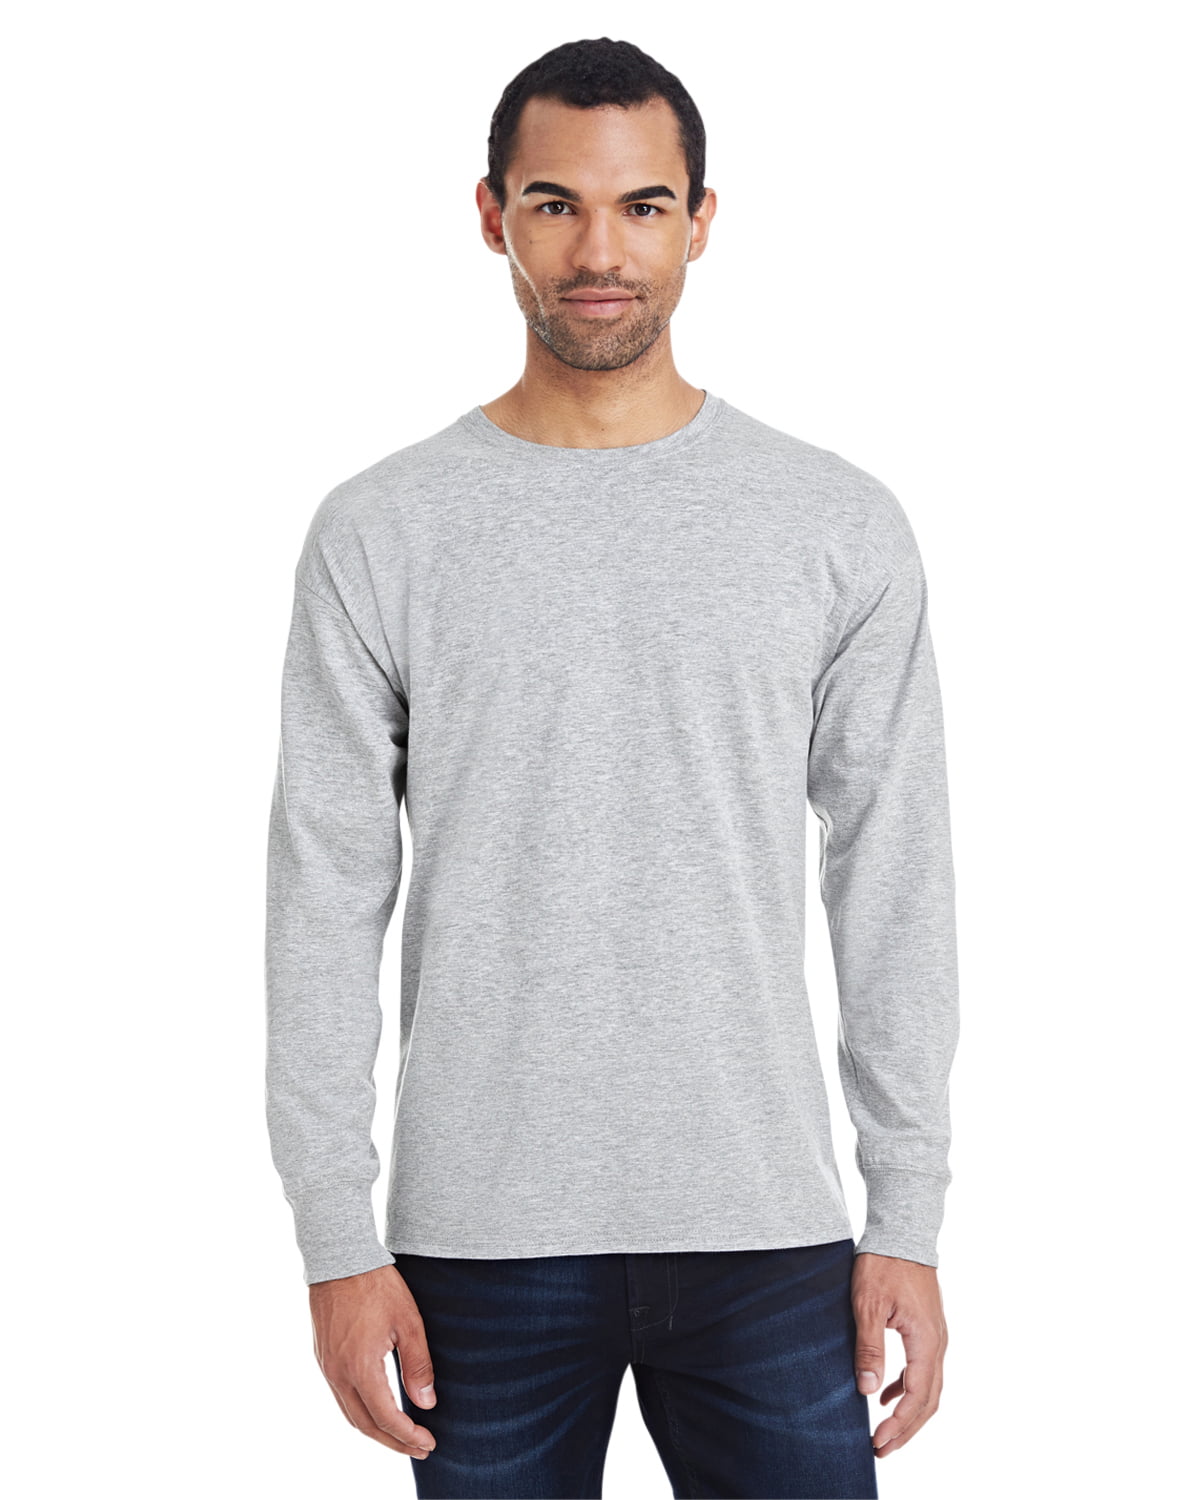 Hanes Men's X-Temp Long Sleeve T-Shirt - Walmart.com